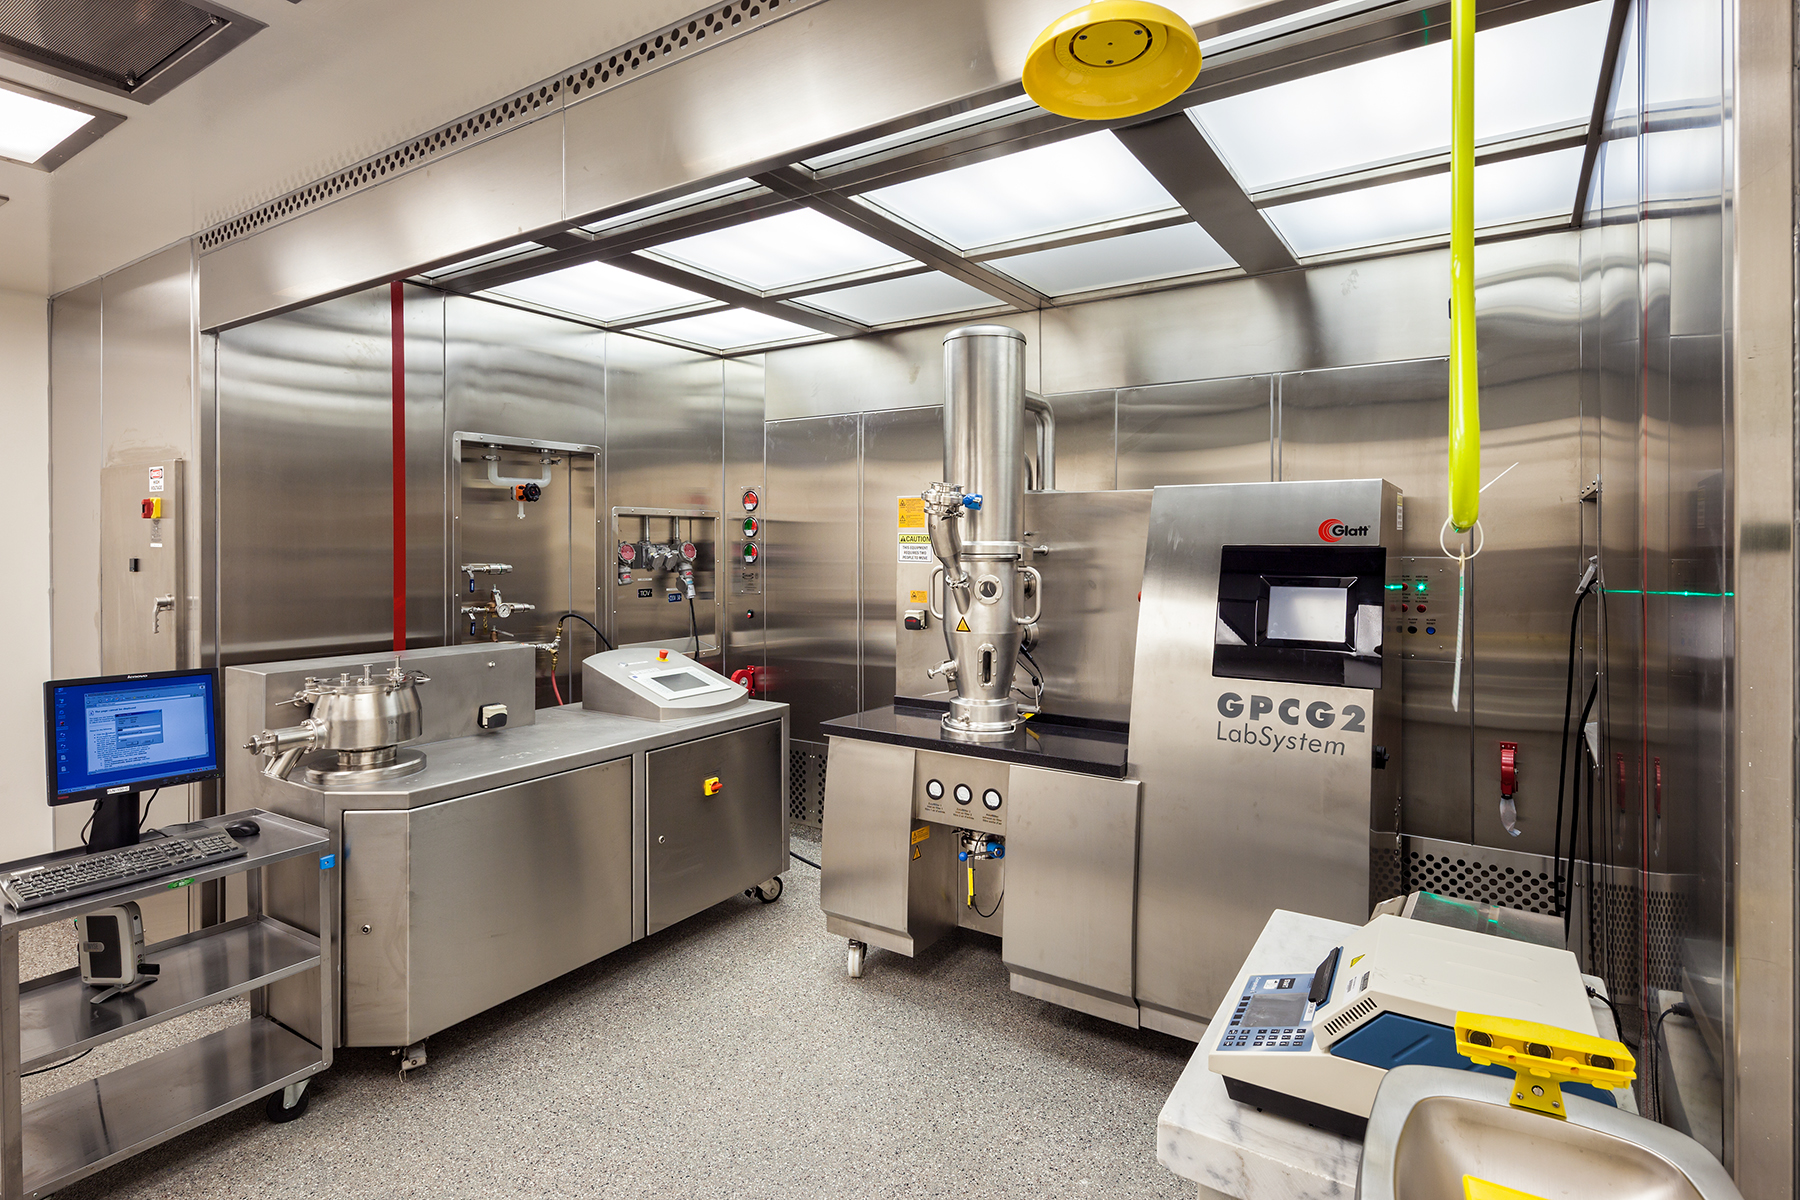 GPCG2 labsystem equipment at Brystol Myers Squibb product development